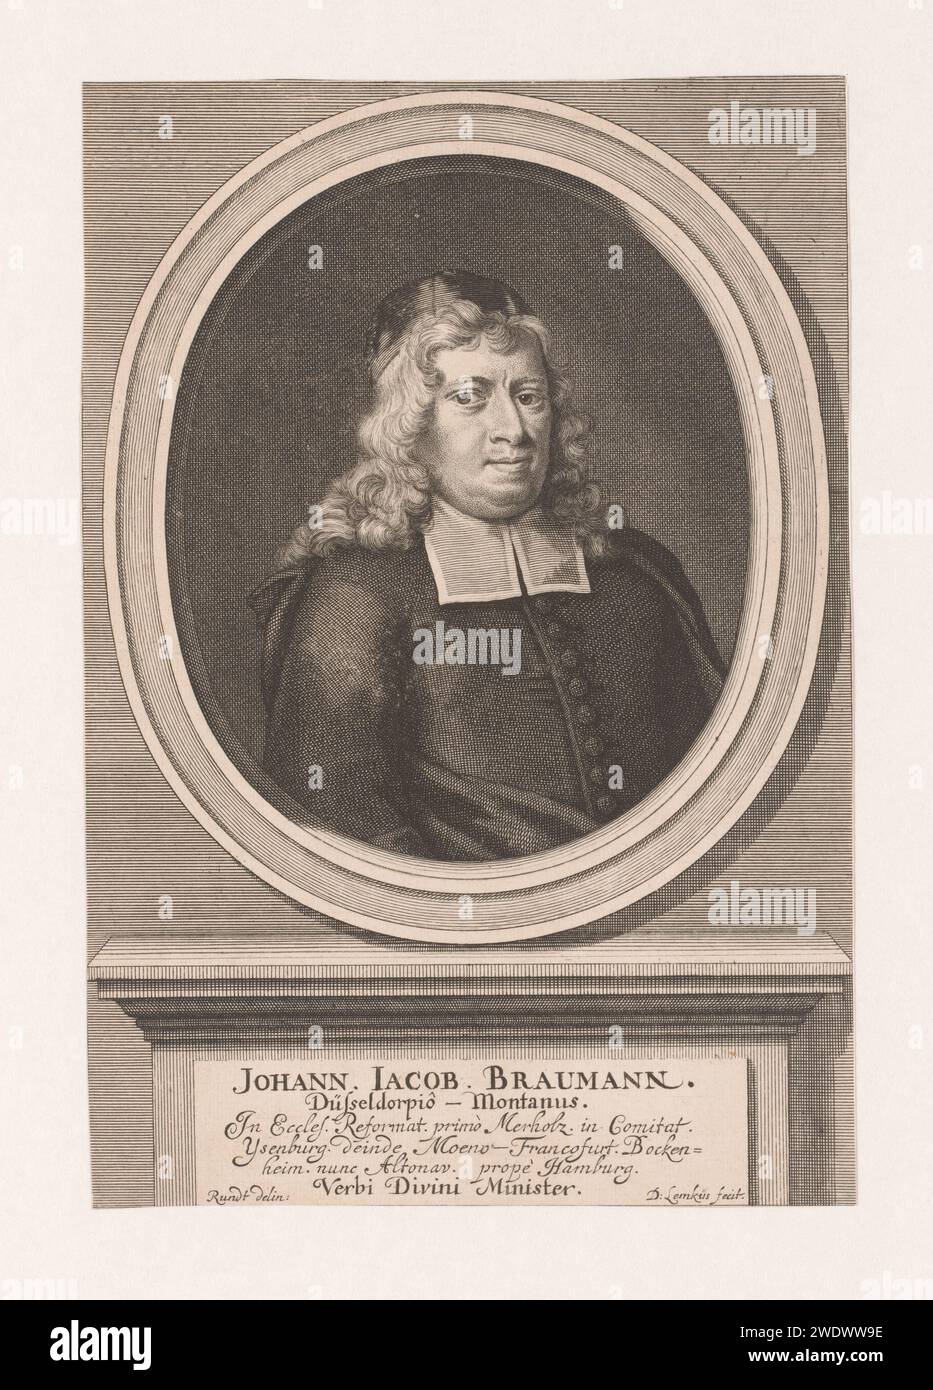 Portrait van Johann Jacob Braumann, Diederich Lemkus, After Hans Hinrich Rundt, 1703 - 1730 print Text in Latin on the pedestal.  paper engraving historical persons Stock Photo